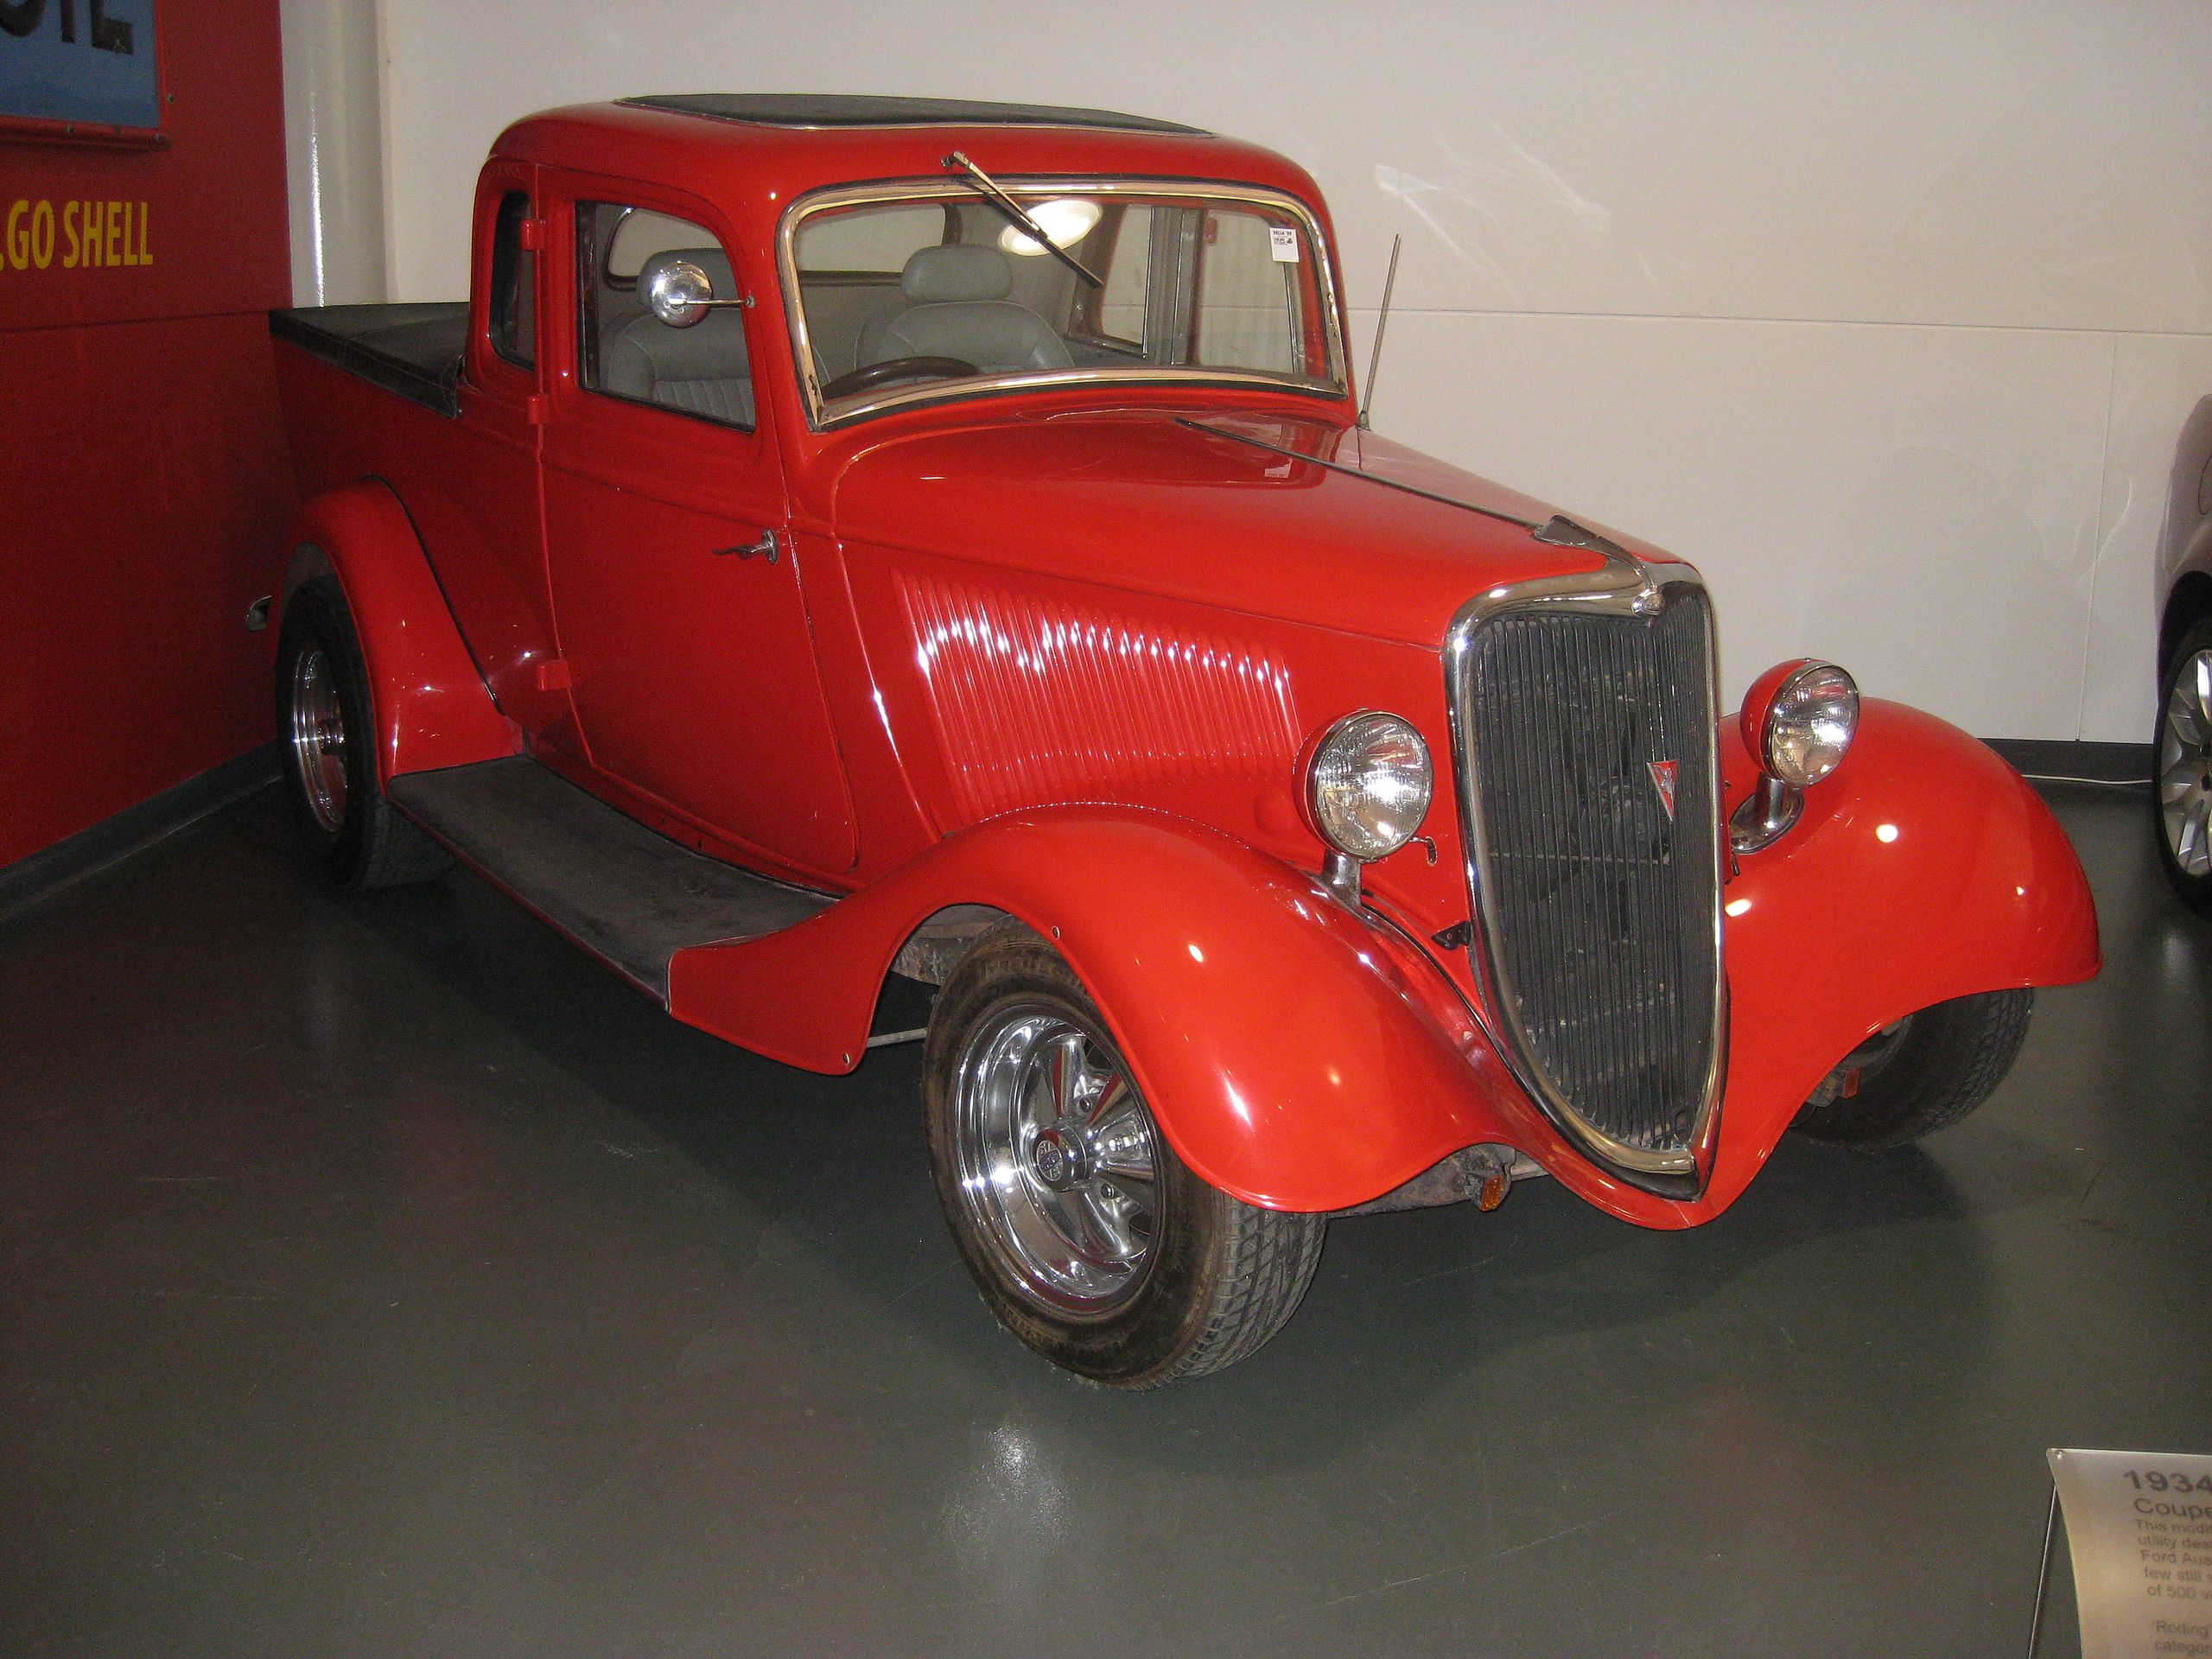 La primer ute de la historia, Ford Coupé Utility 1934
By GTHO - Own work, Public Domain, https://commons.wikimedia.org/w/index.php?curid=9911330